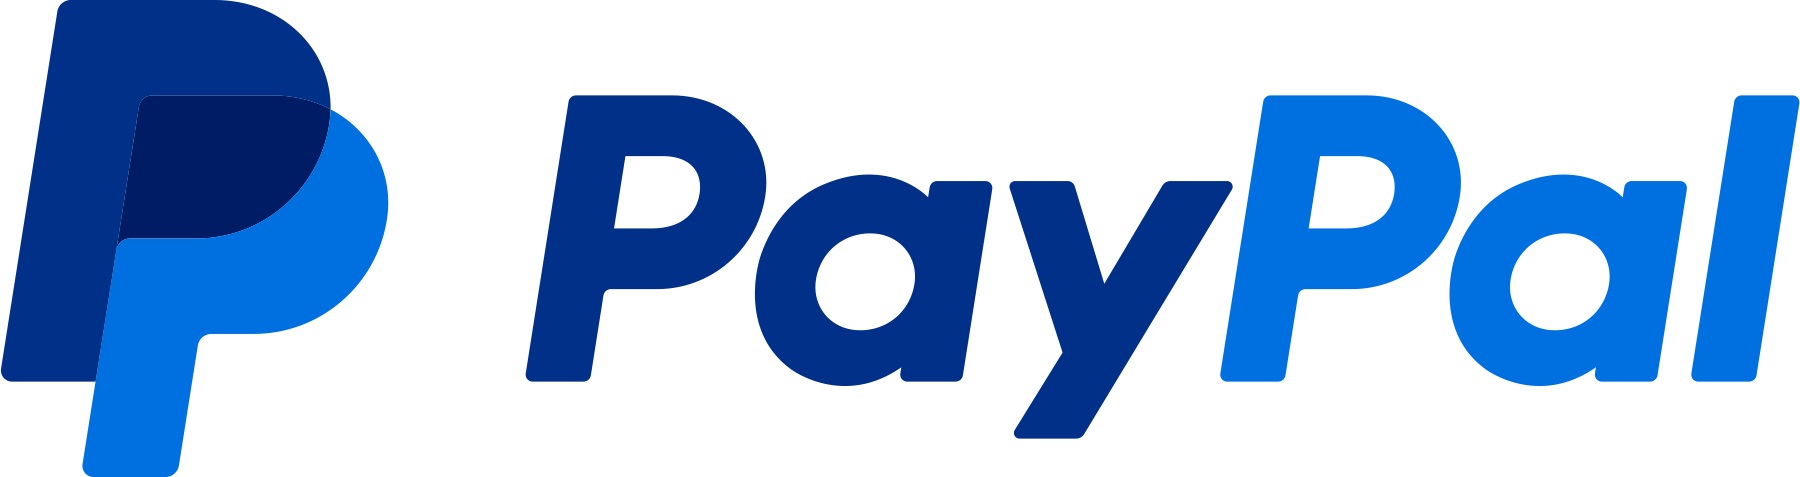 PayPal_Logo_Horizontal_Full_Color_RGB.jpg